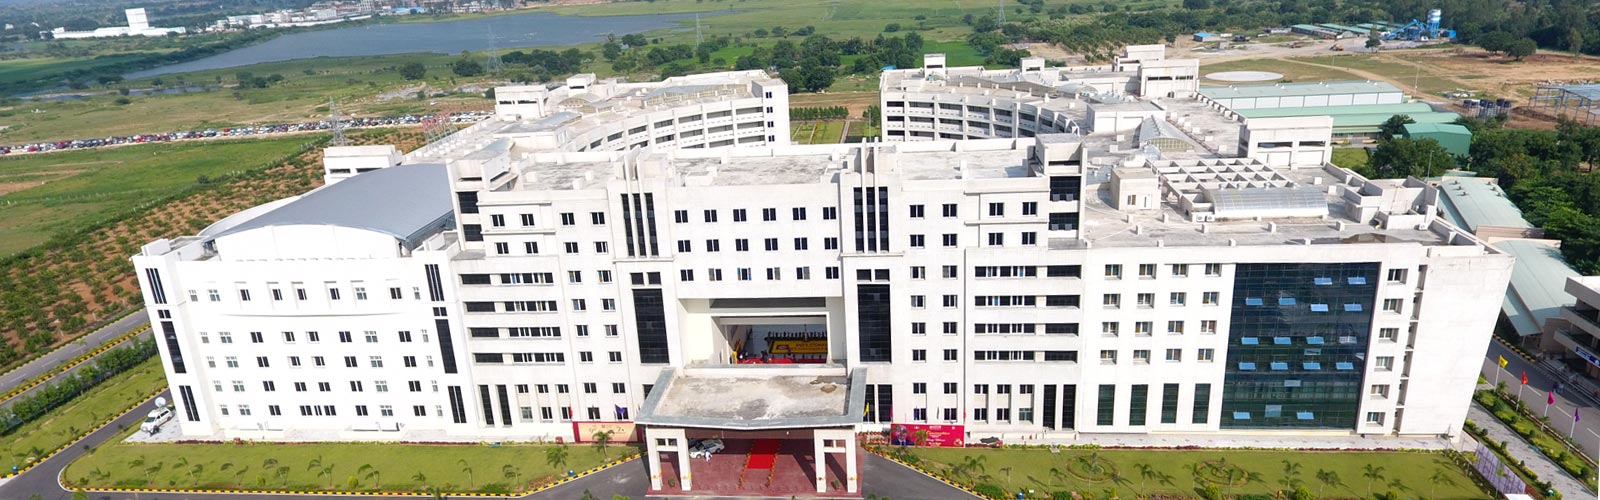 GITAM - Gandhi Institute of Technology and Management University